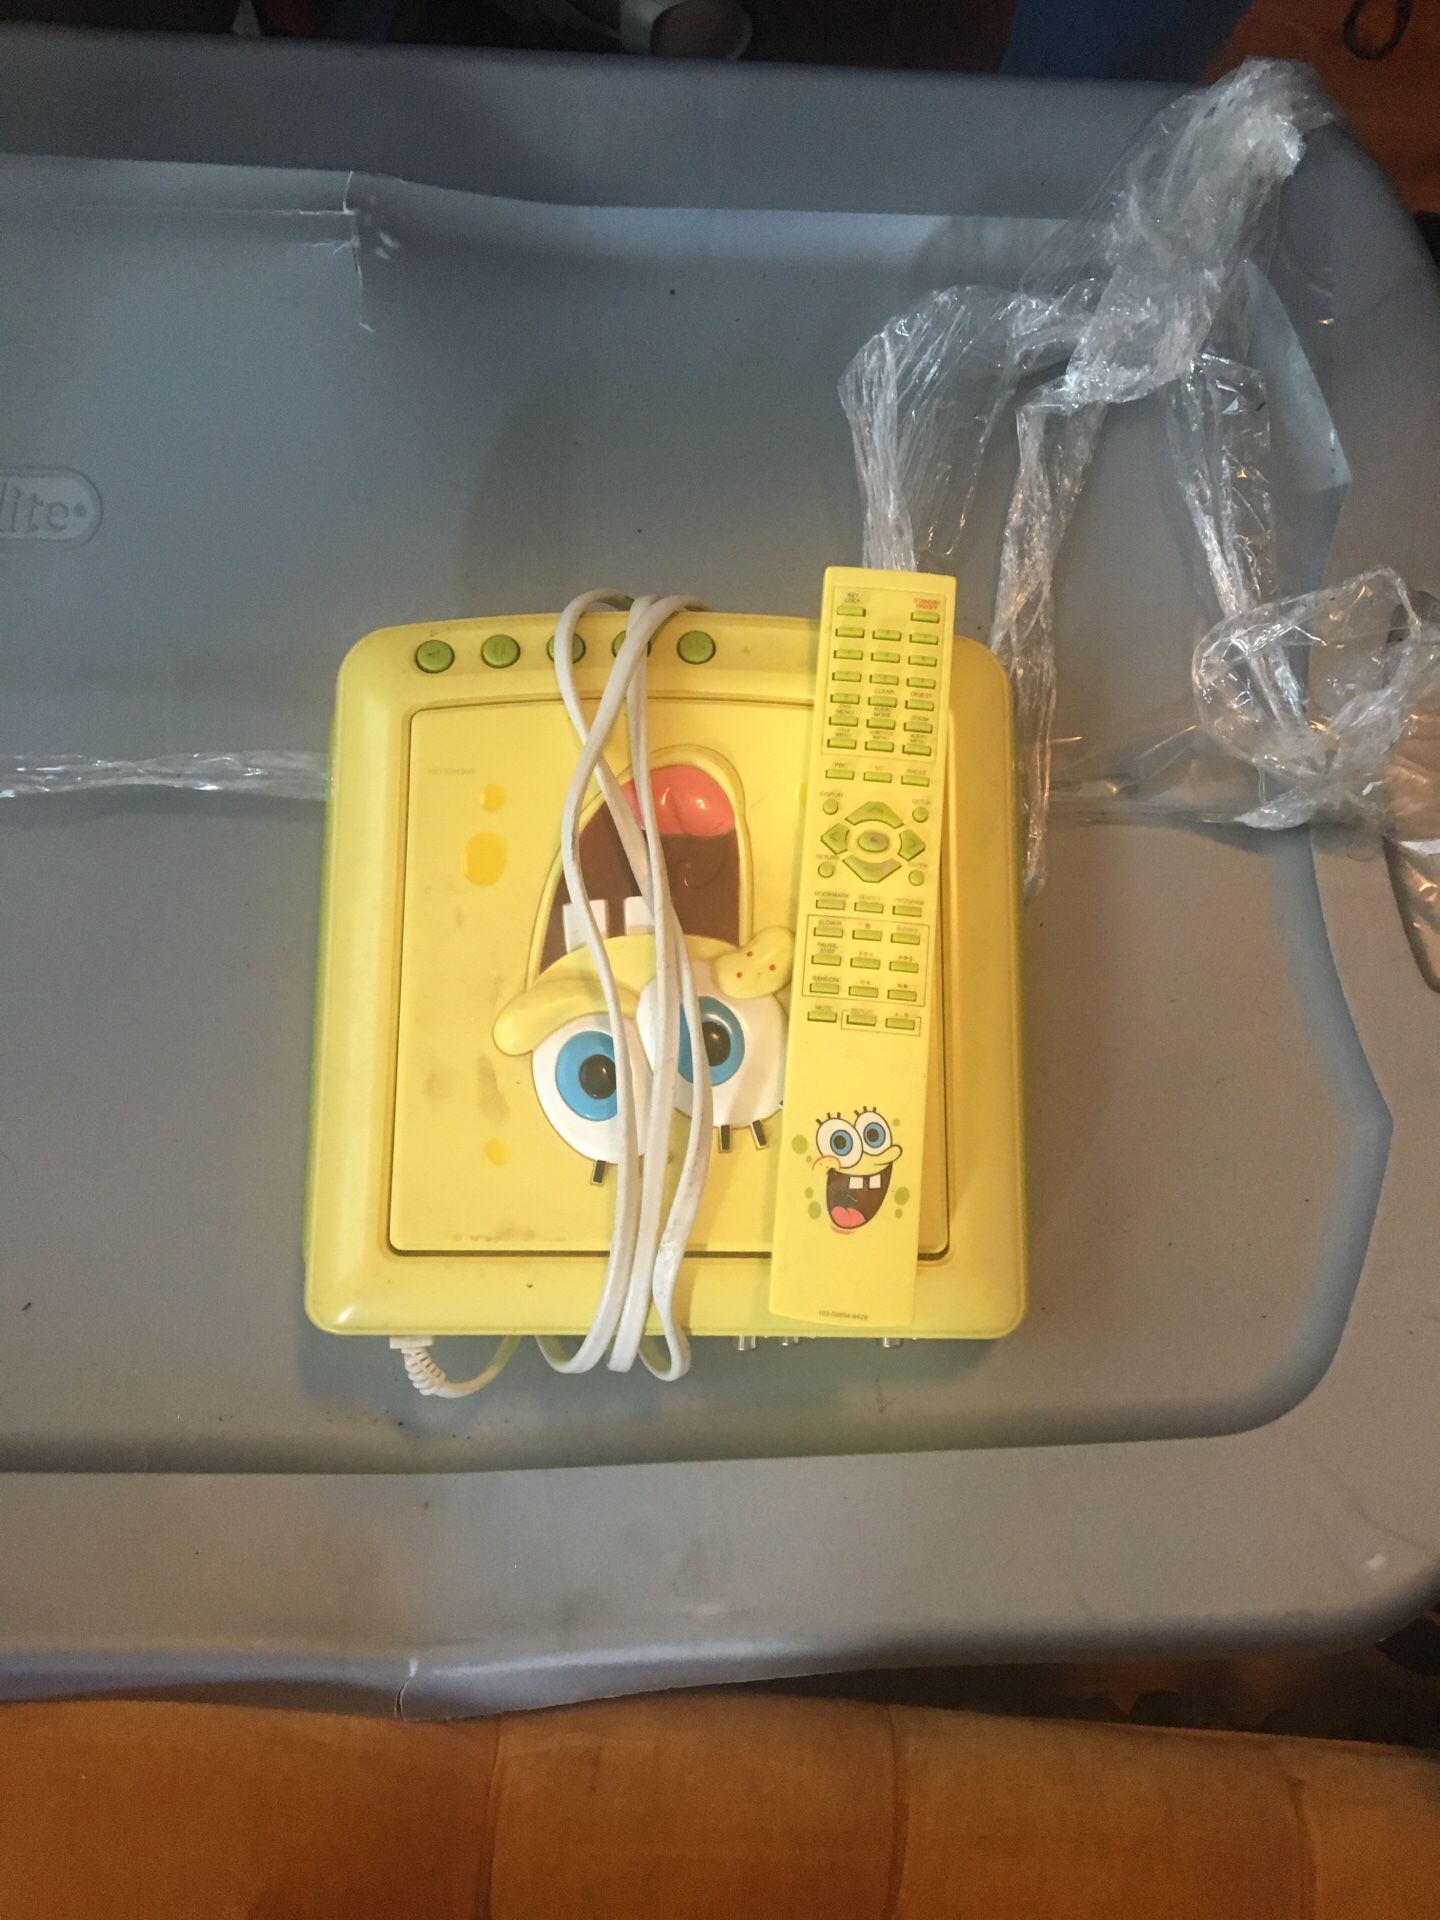 SpongeBob DVD player